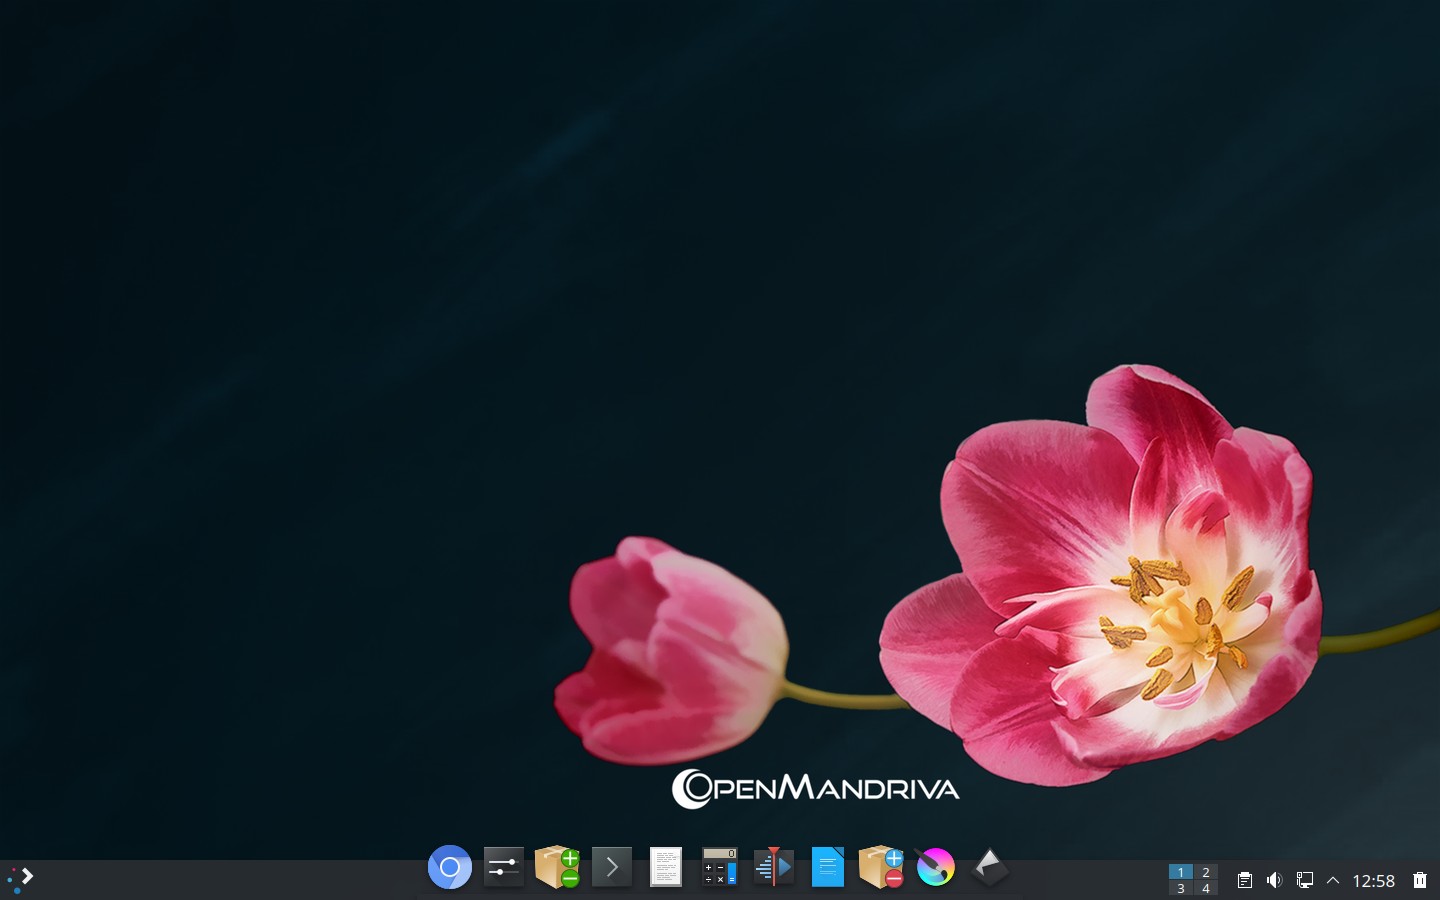 OpenMandriva ROME Desktop with Latte Dock